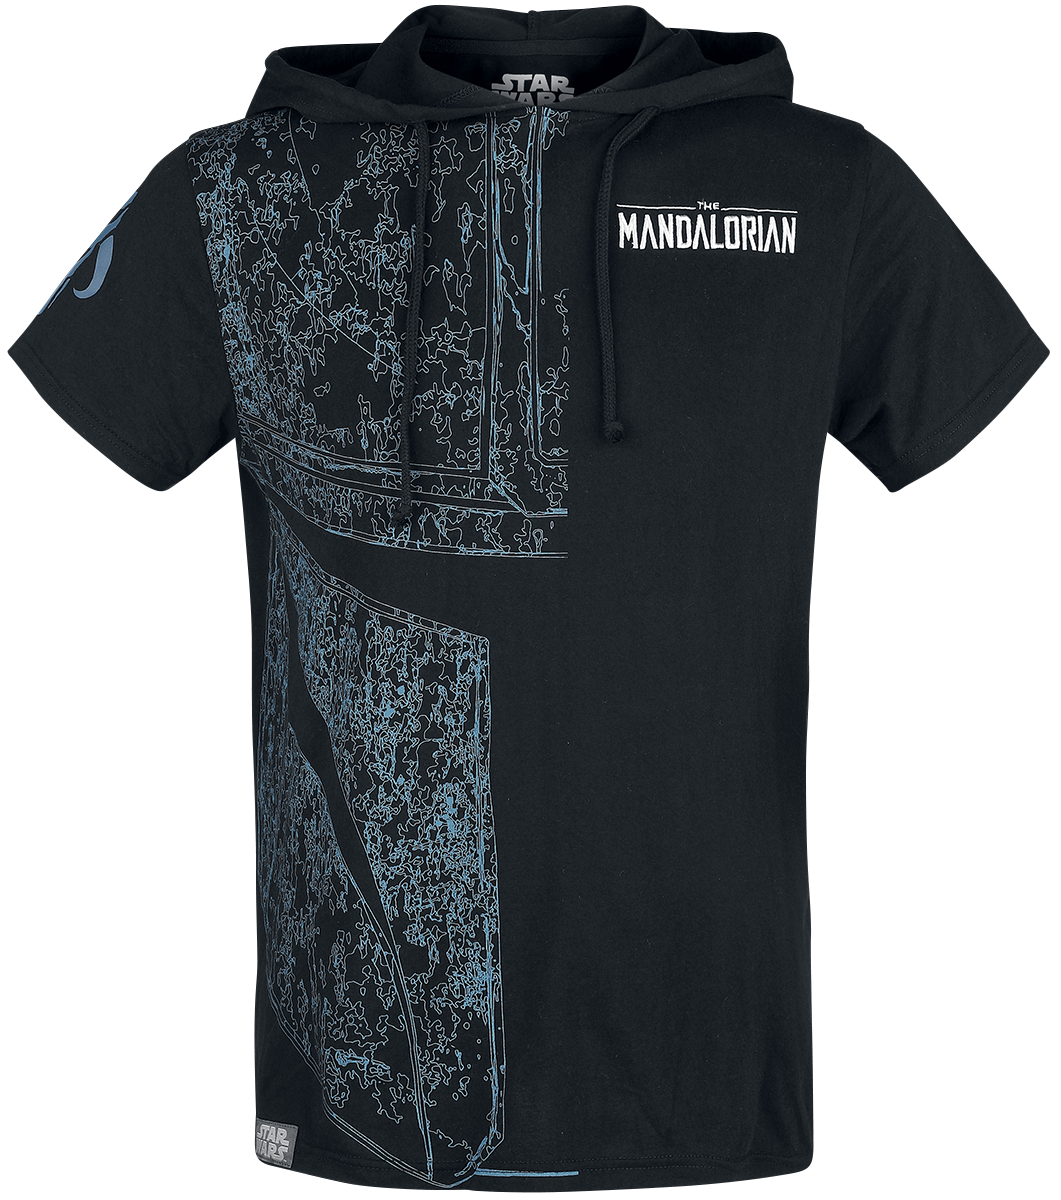 Star Wars - The Mandalorian - T-Shirt - schwarz - EMP Exklusiv!